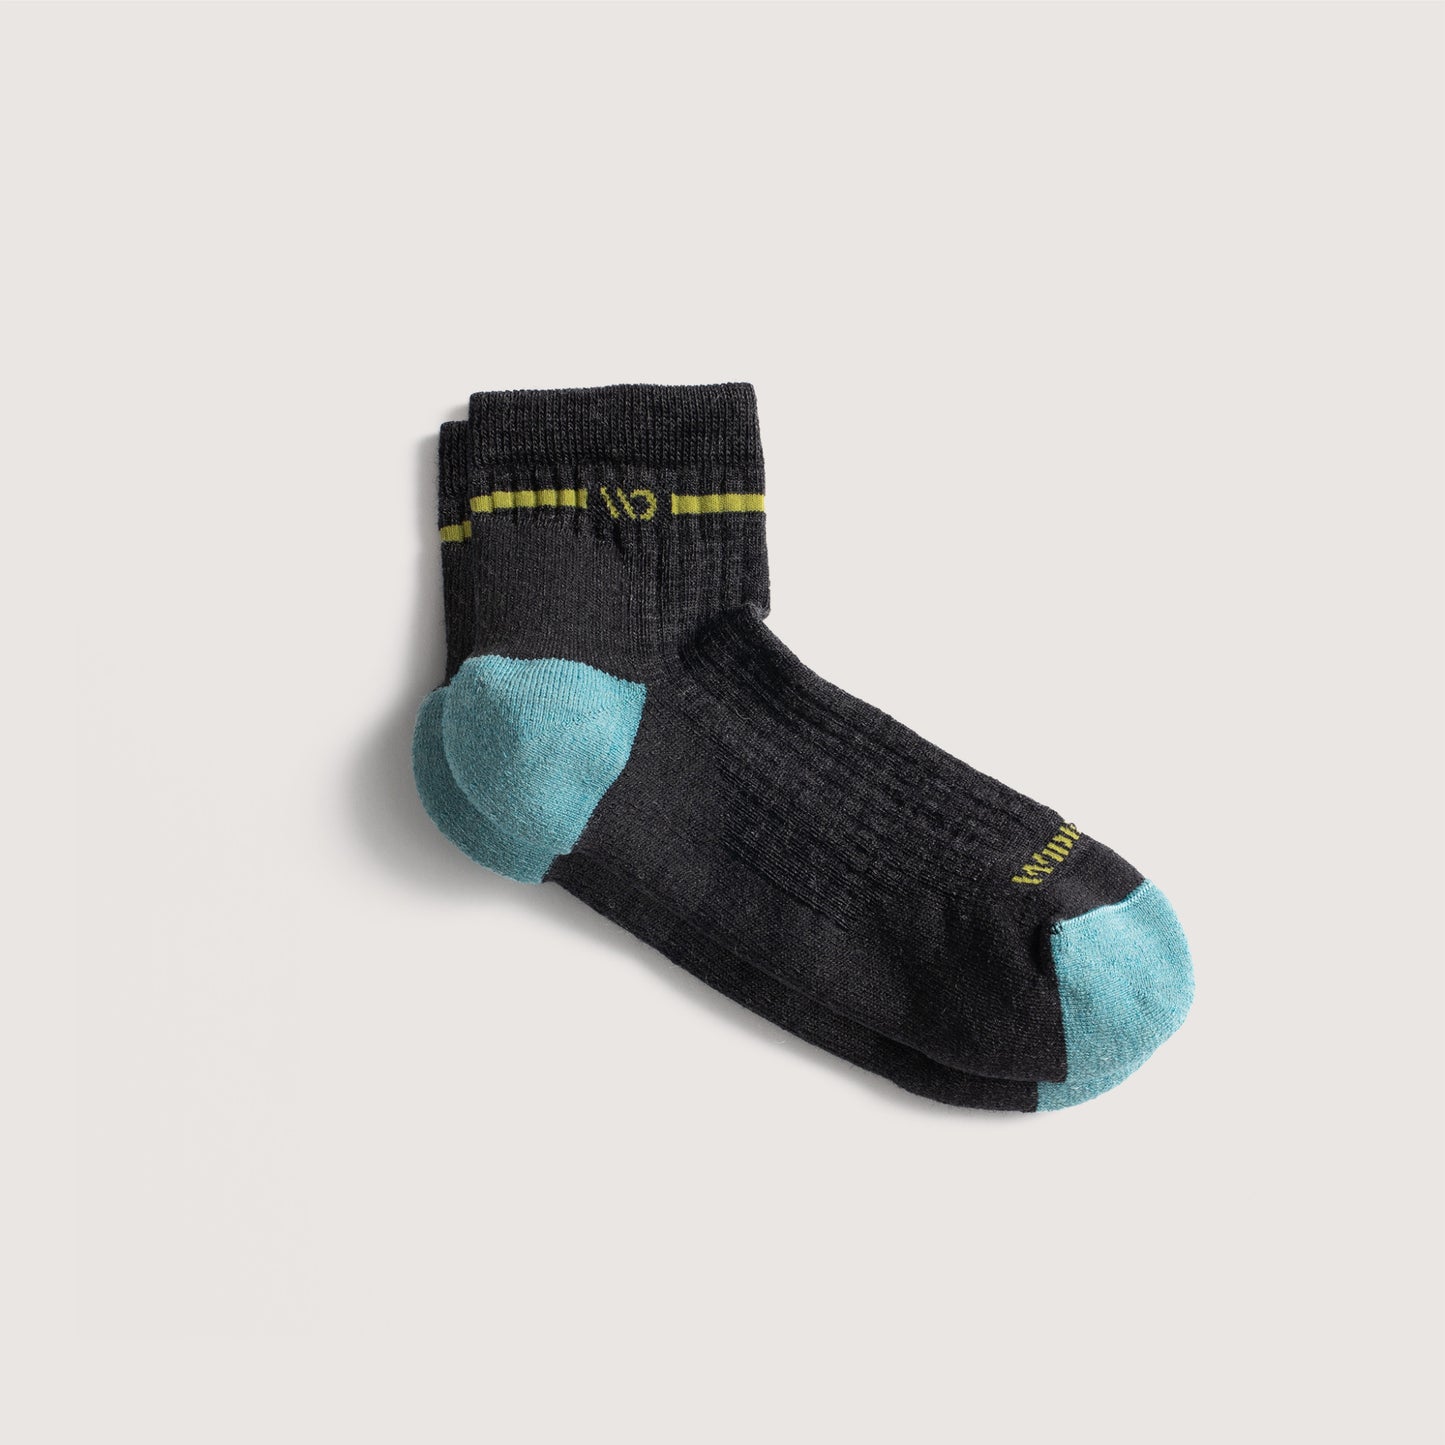 Socks with aqua toe, yellow logo, charcoal body, and yellow stripe below cuff--Charcoal